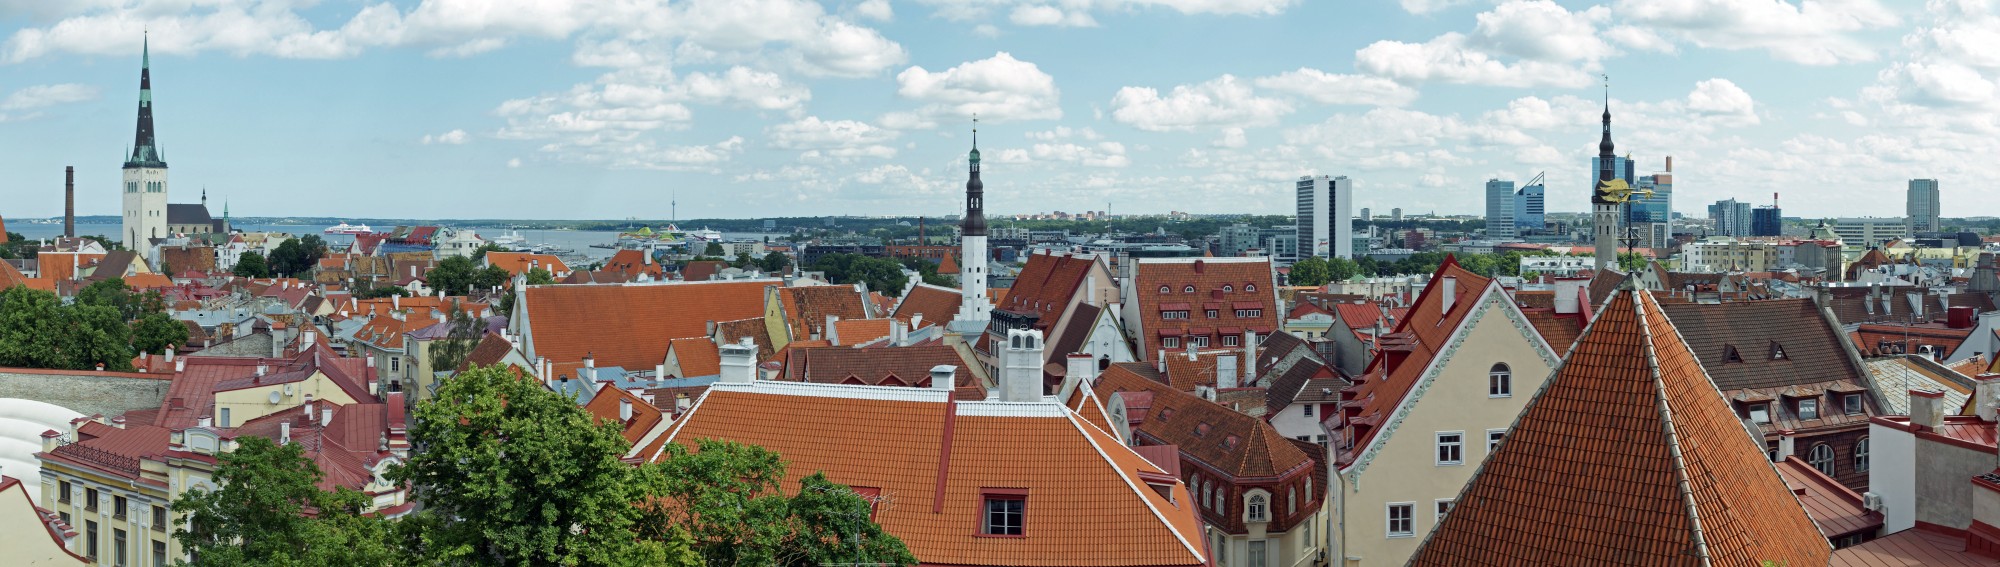 View of Tallinn old town 1